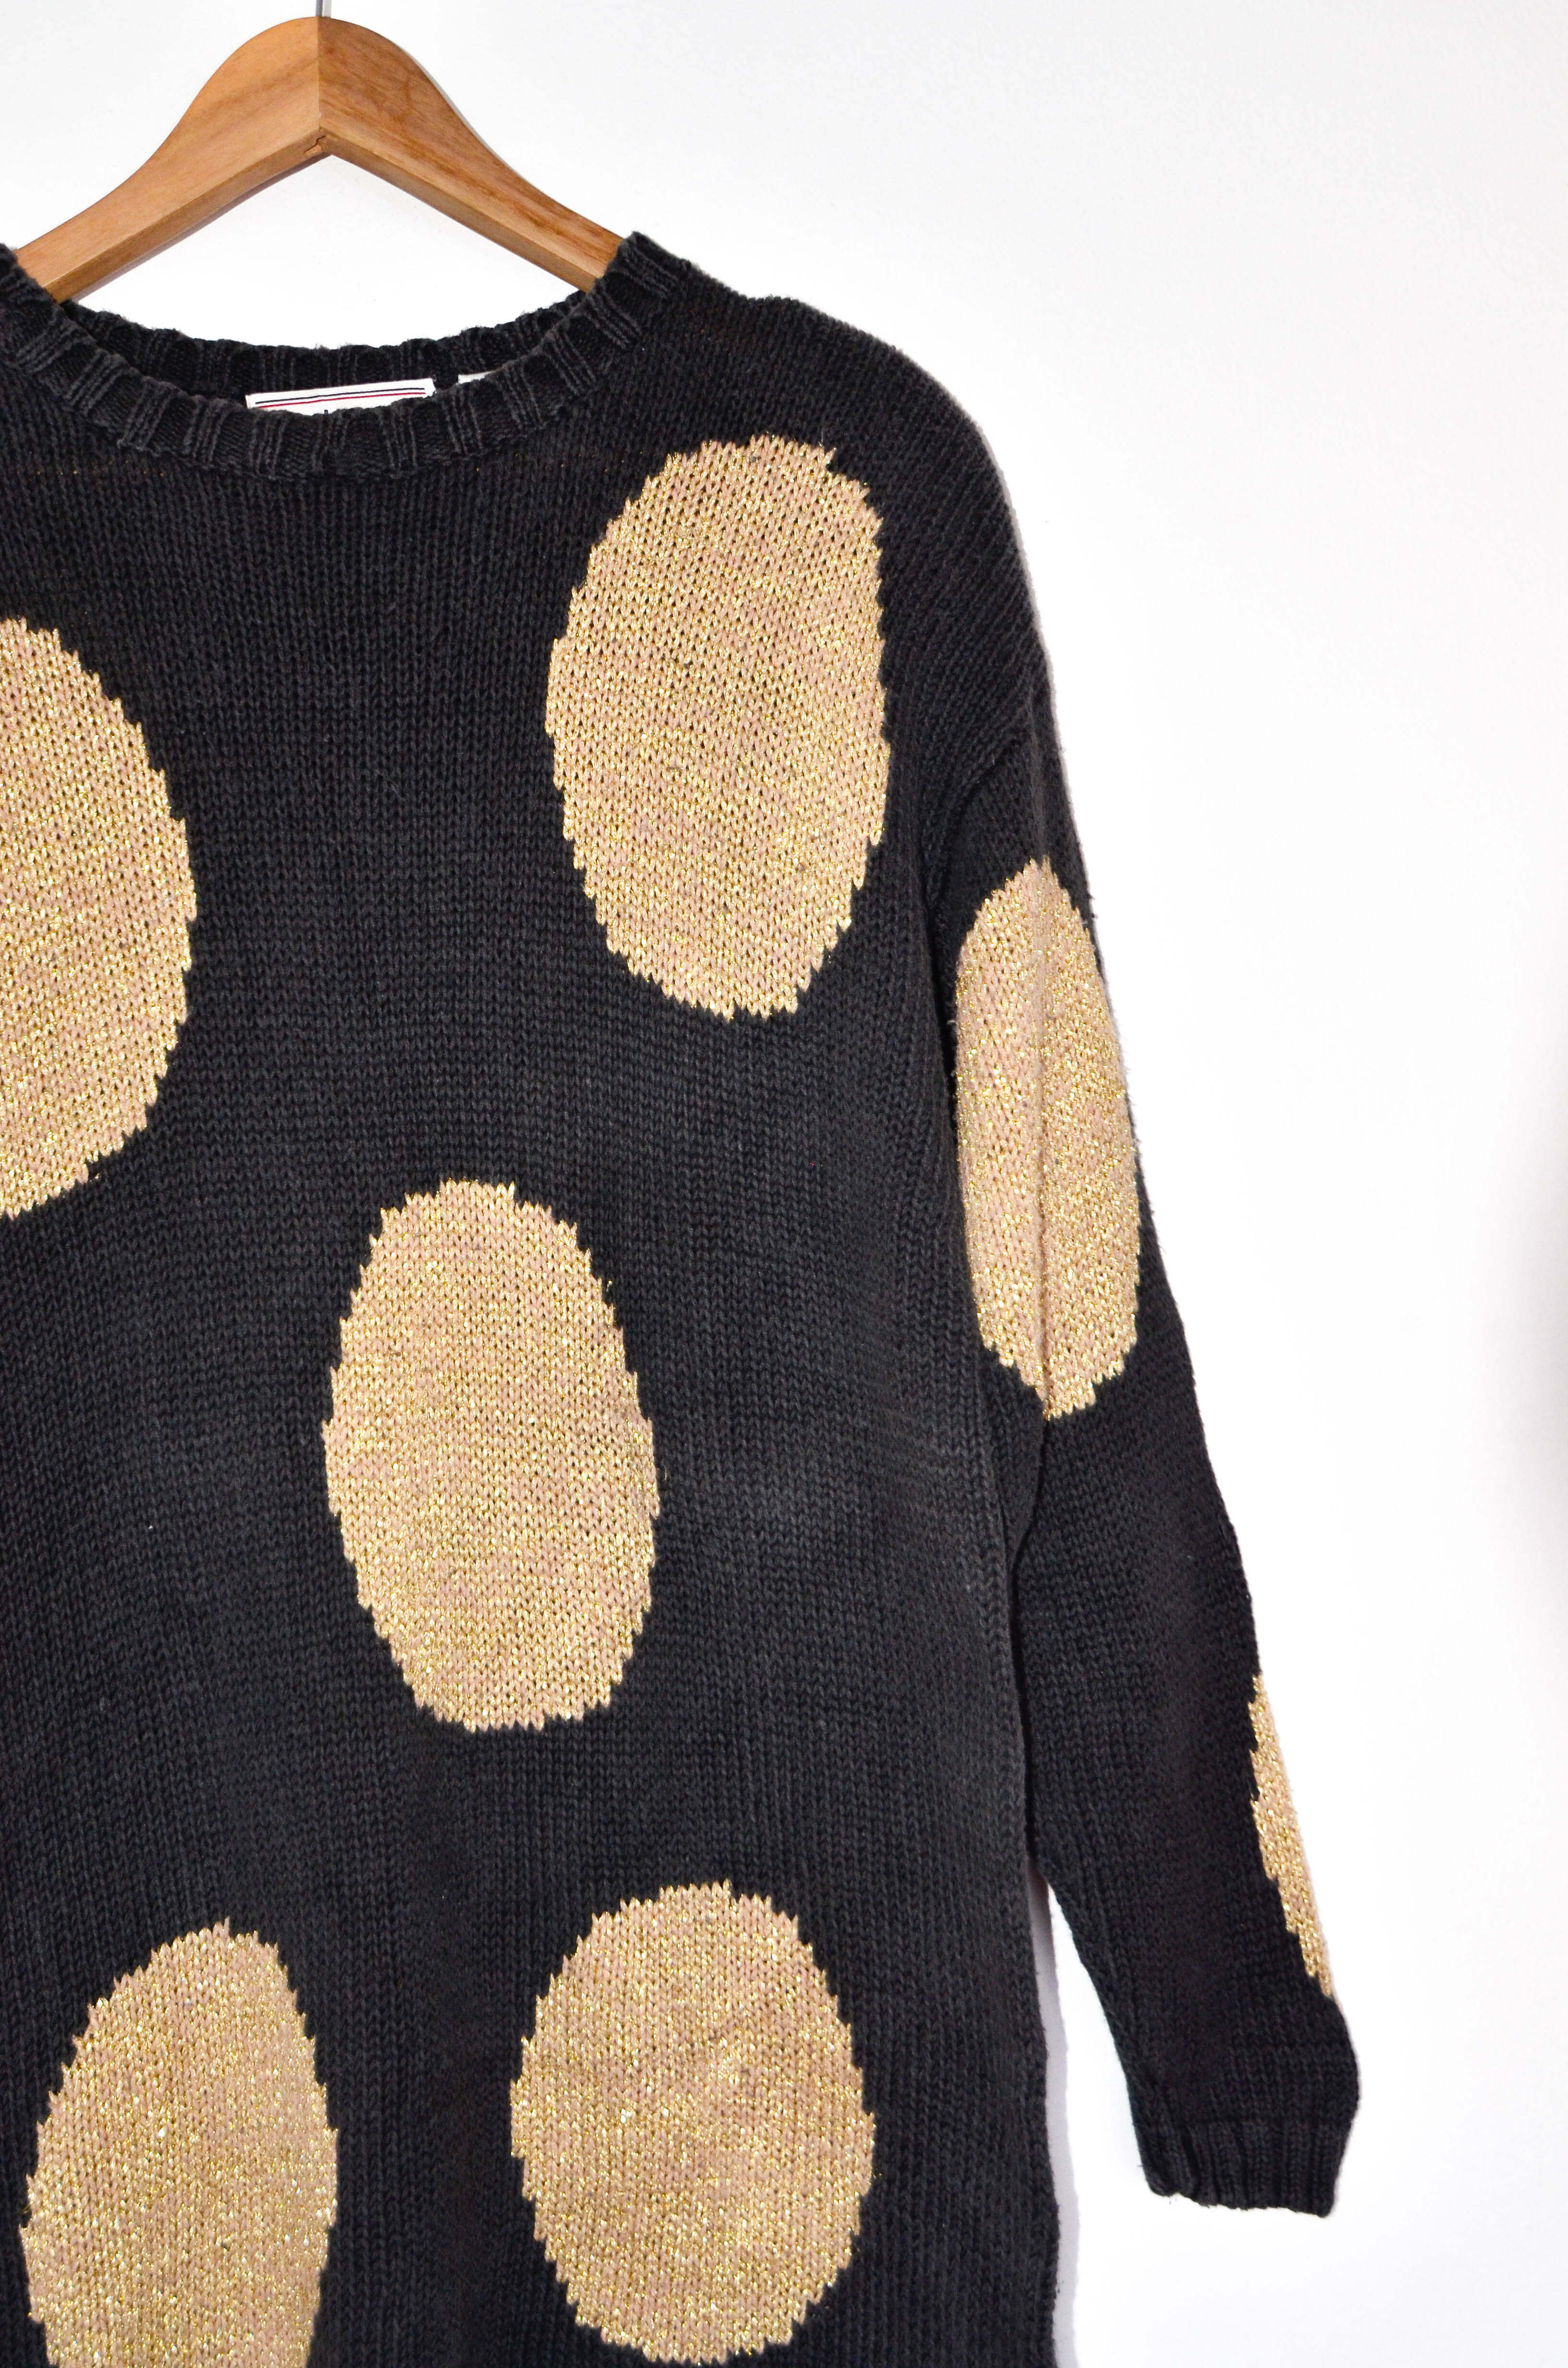 Sweater dress café 80s dots